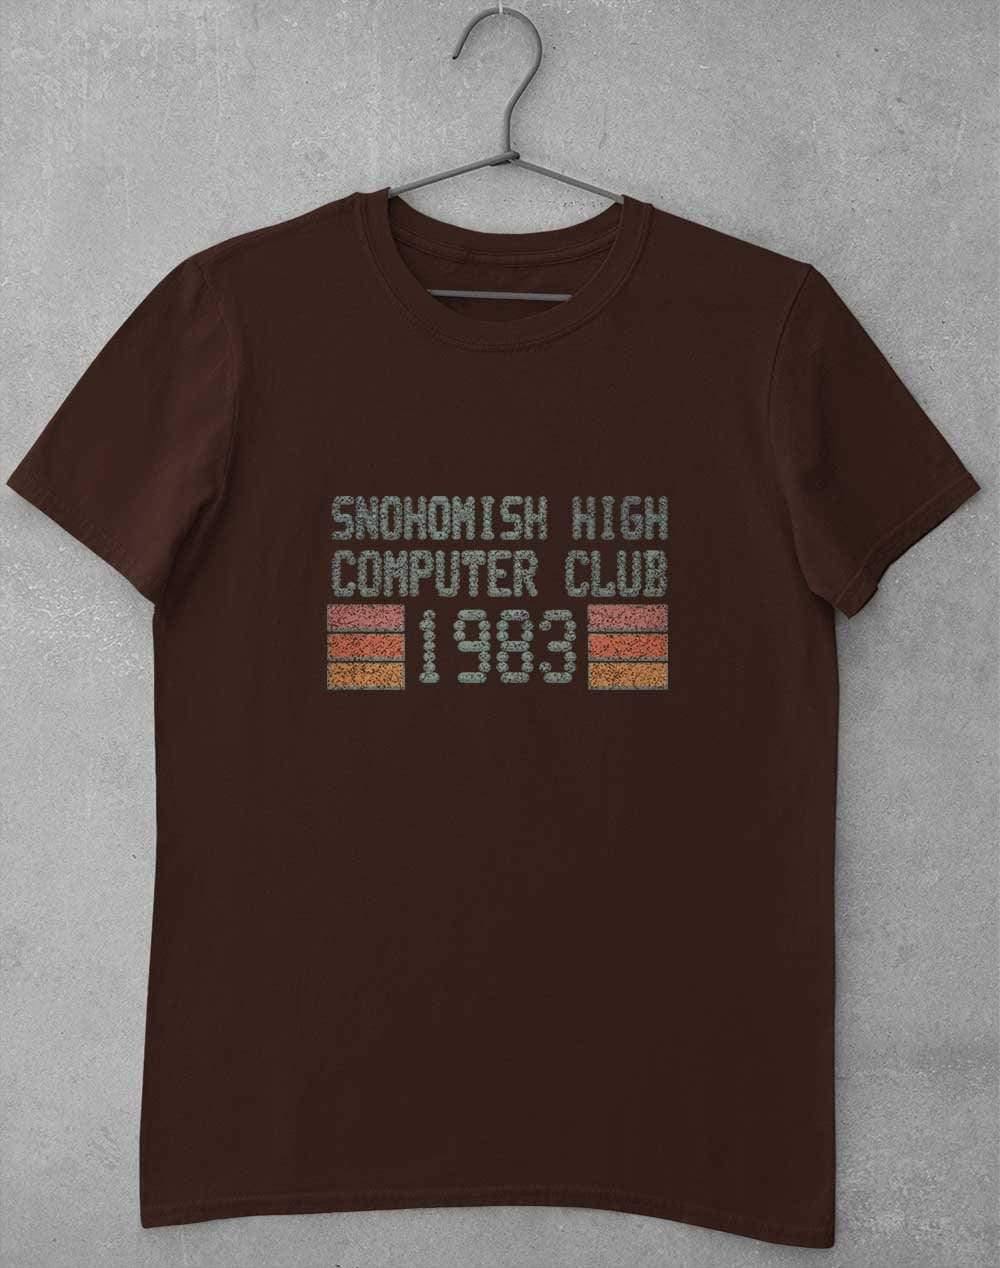 Snohomish High Computer Club 1983 T-Shirt S / Dark Chocolate  - Off World Tees